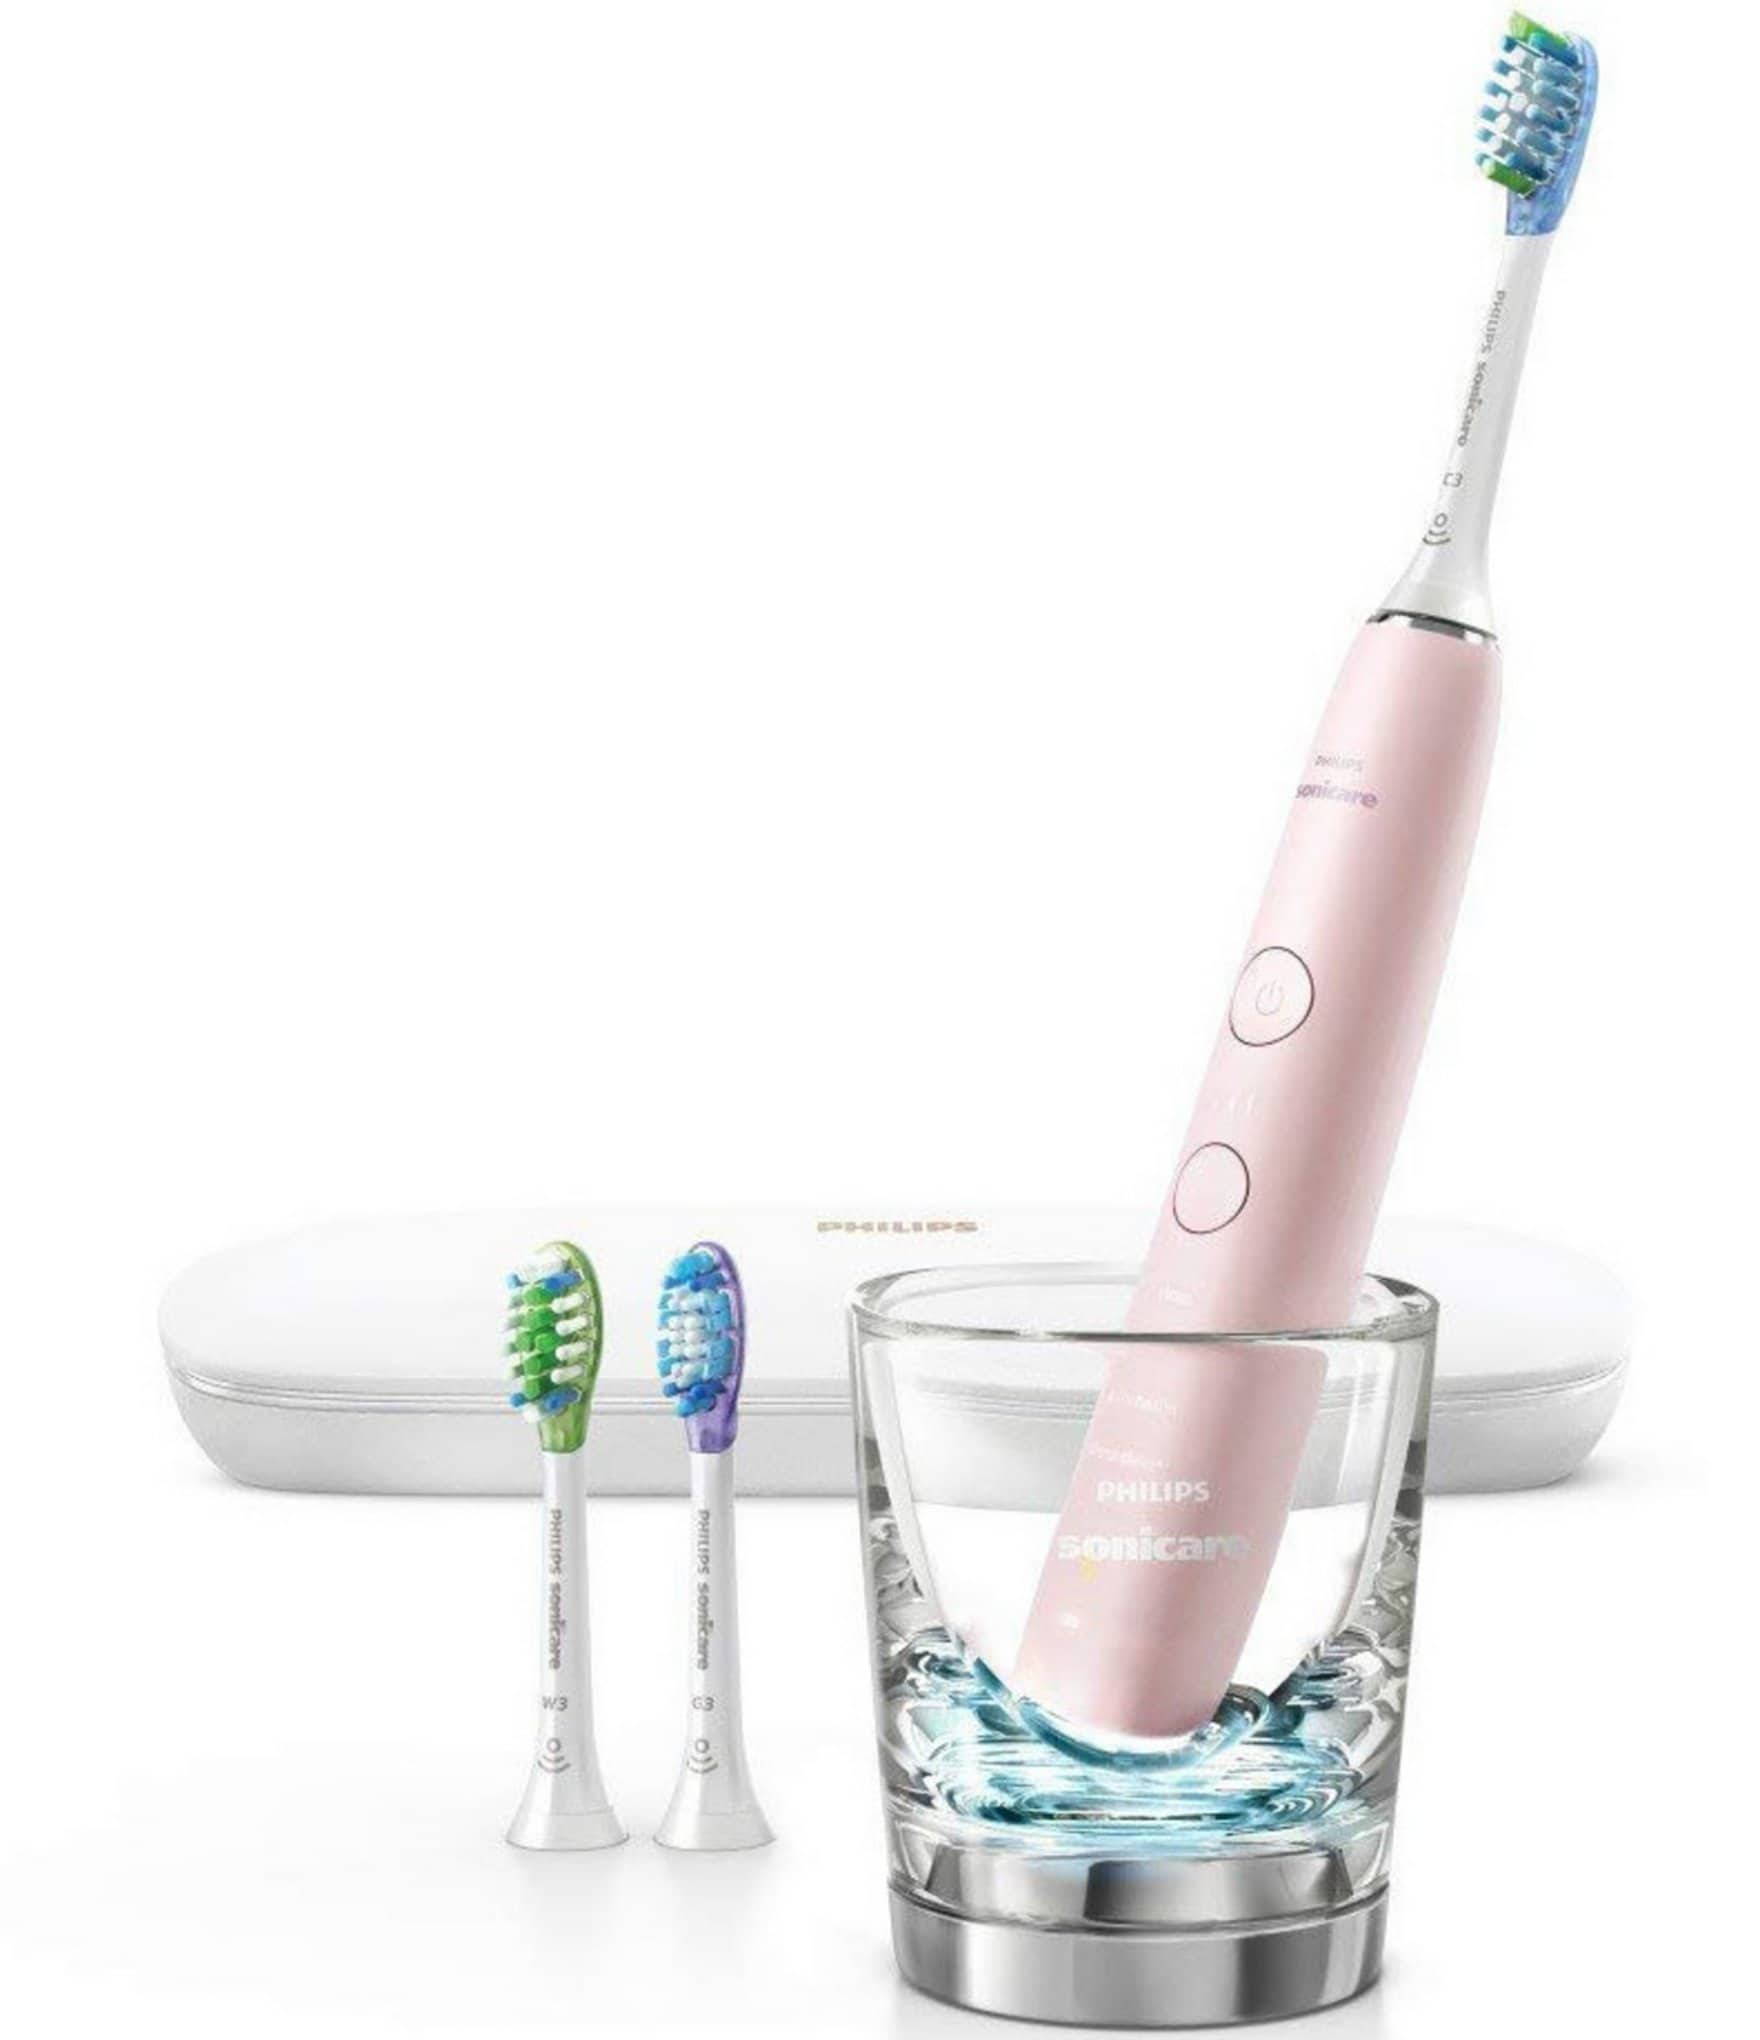 philips-sonicare-diamond-clean-smart-electric-4-mode-toothbrush-dillard-s